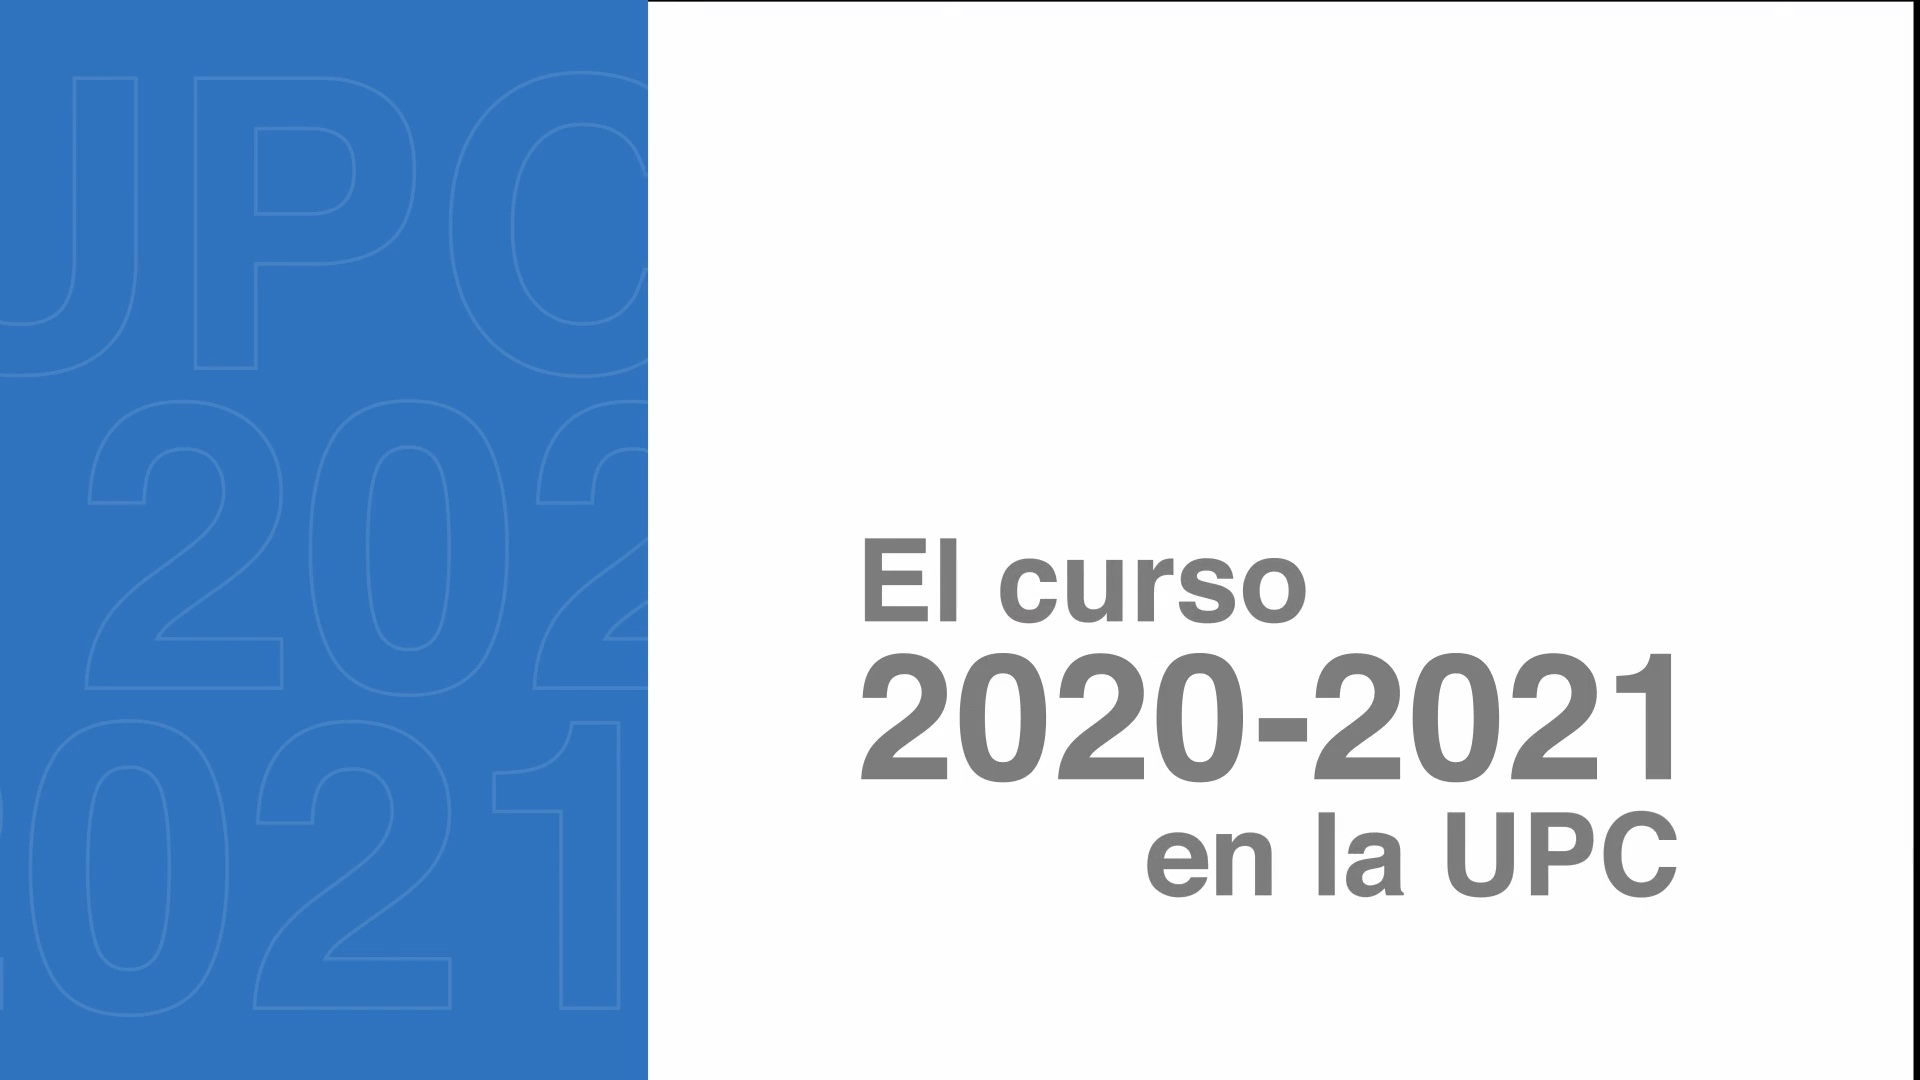 La UPC hoy, curso 2021-2022